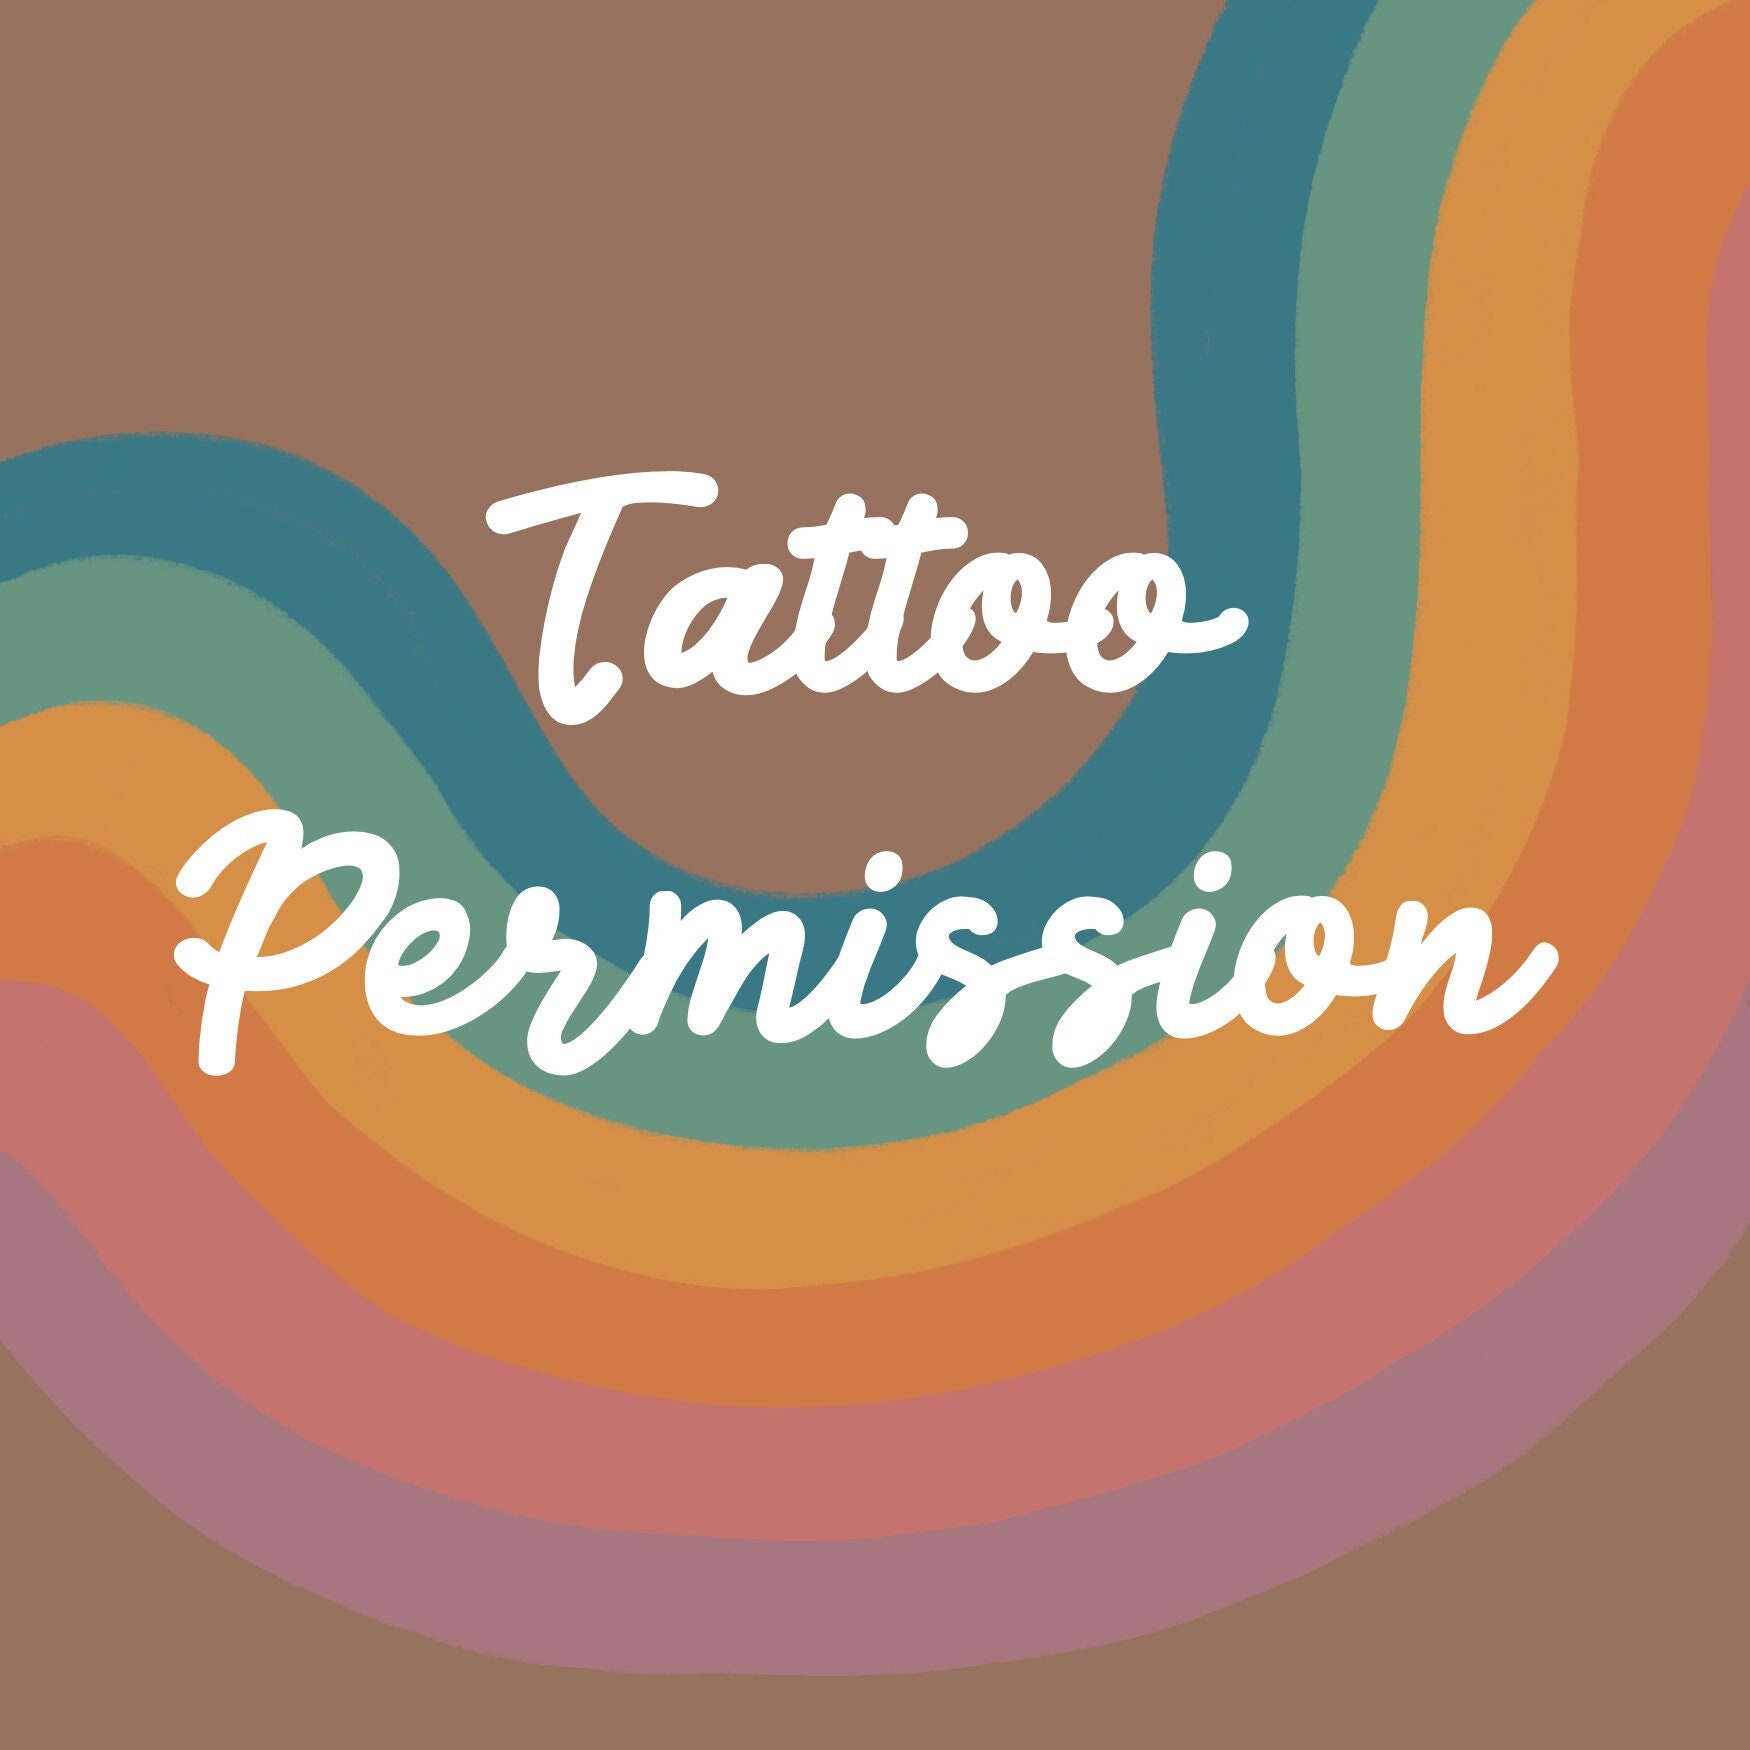 City of Stars Observatory - Tattoo Transparent Permission PNG